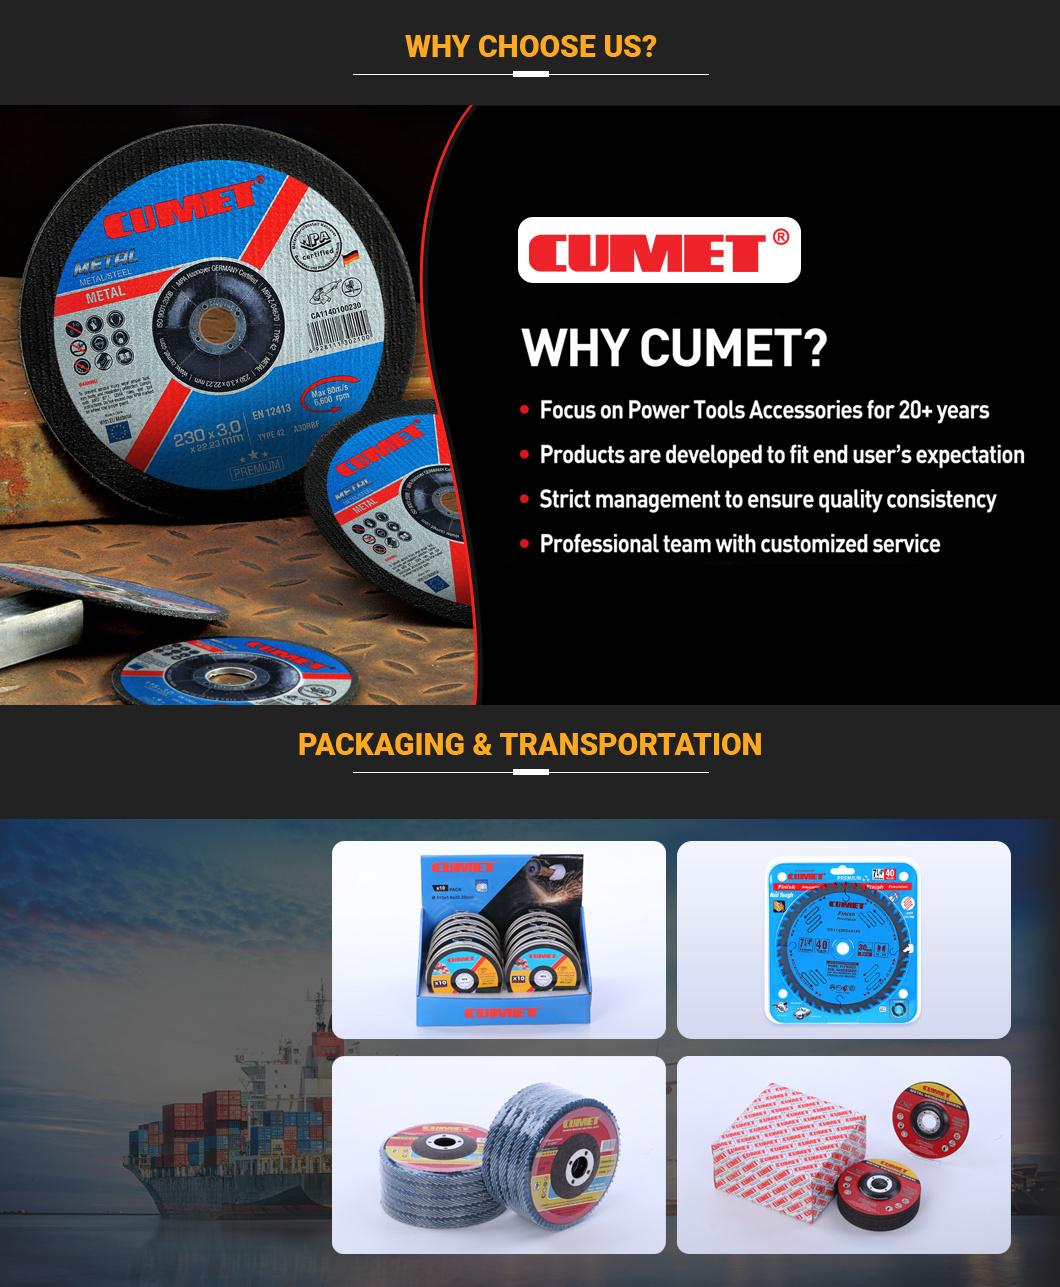 Cumet Metabo T41A-125X1.0X22.2mm Zhejiang Jinhua Diamond Grinding Wheels Cut-off Wheel